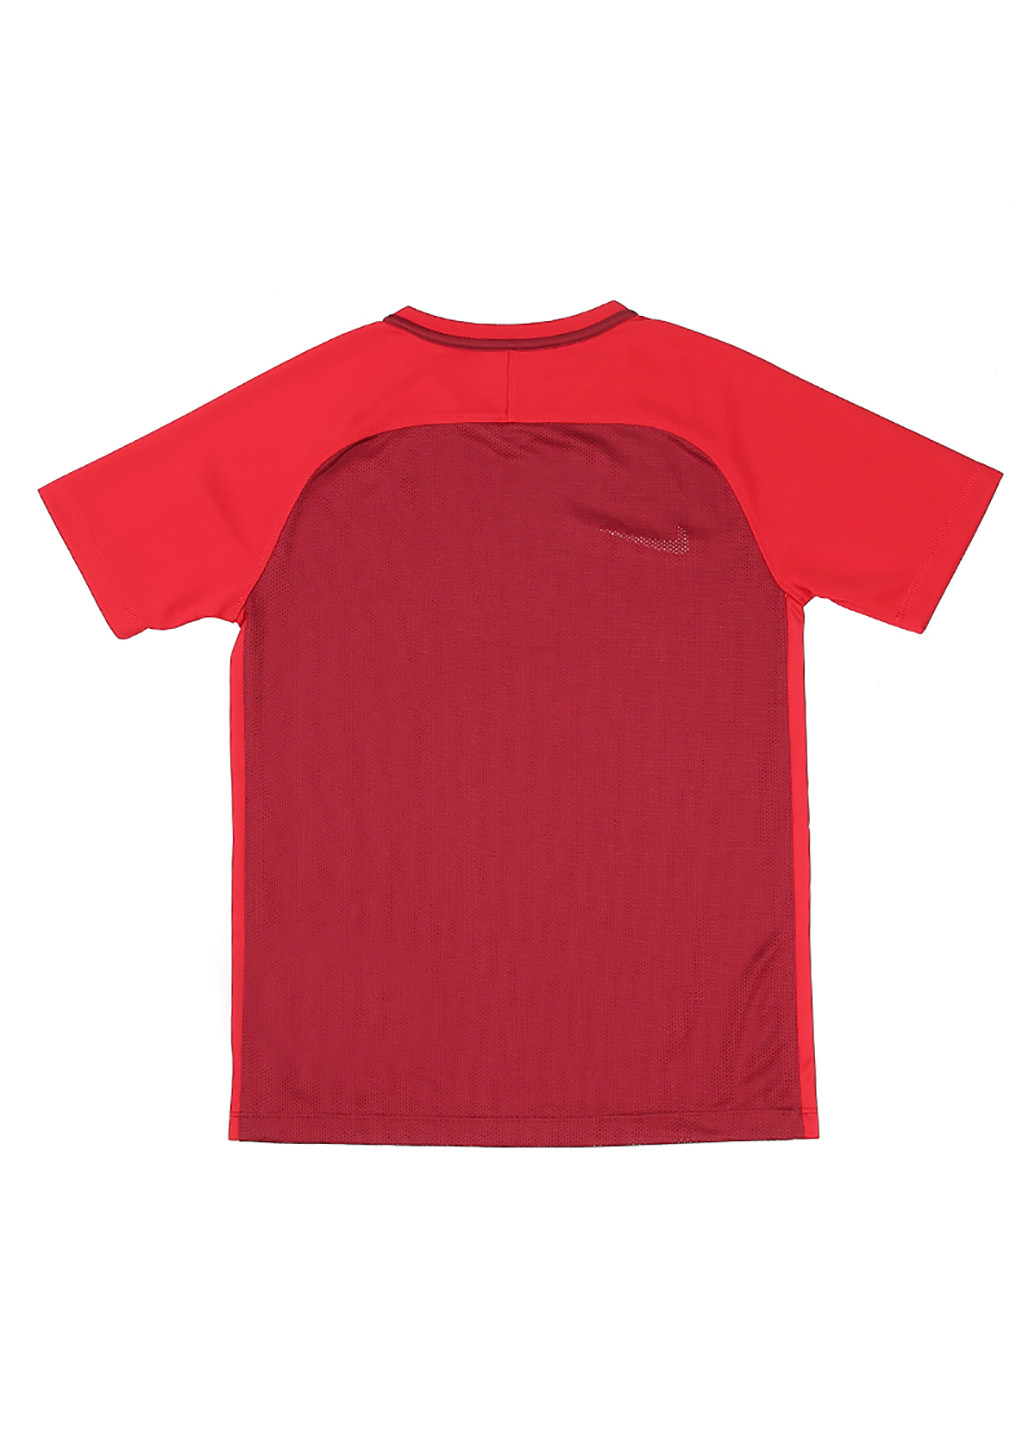 Бордовая демисезонная футболка Nike Y NK DRY TROPHY III JSY SS